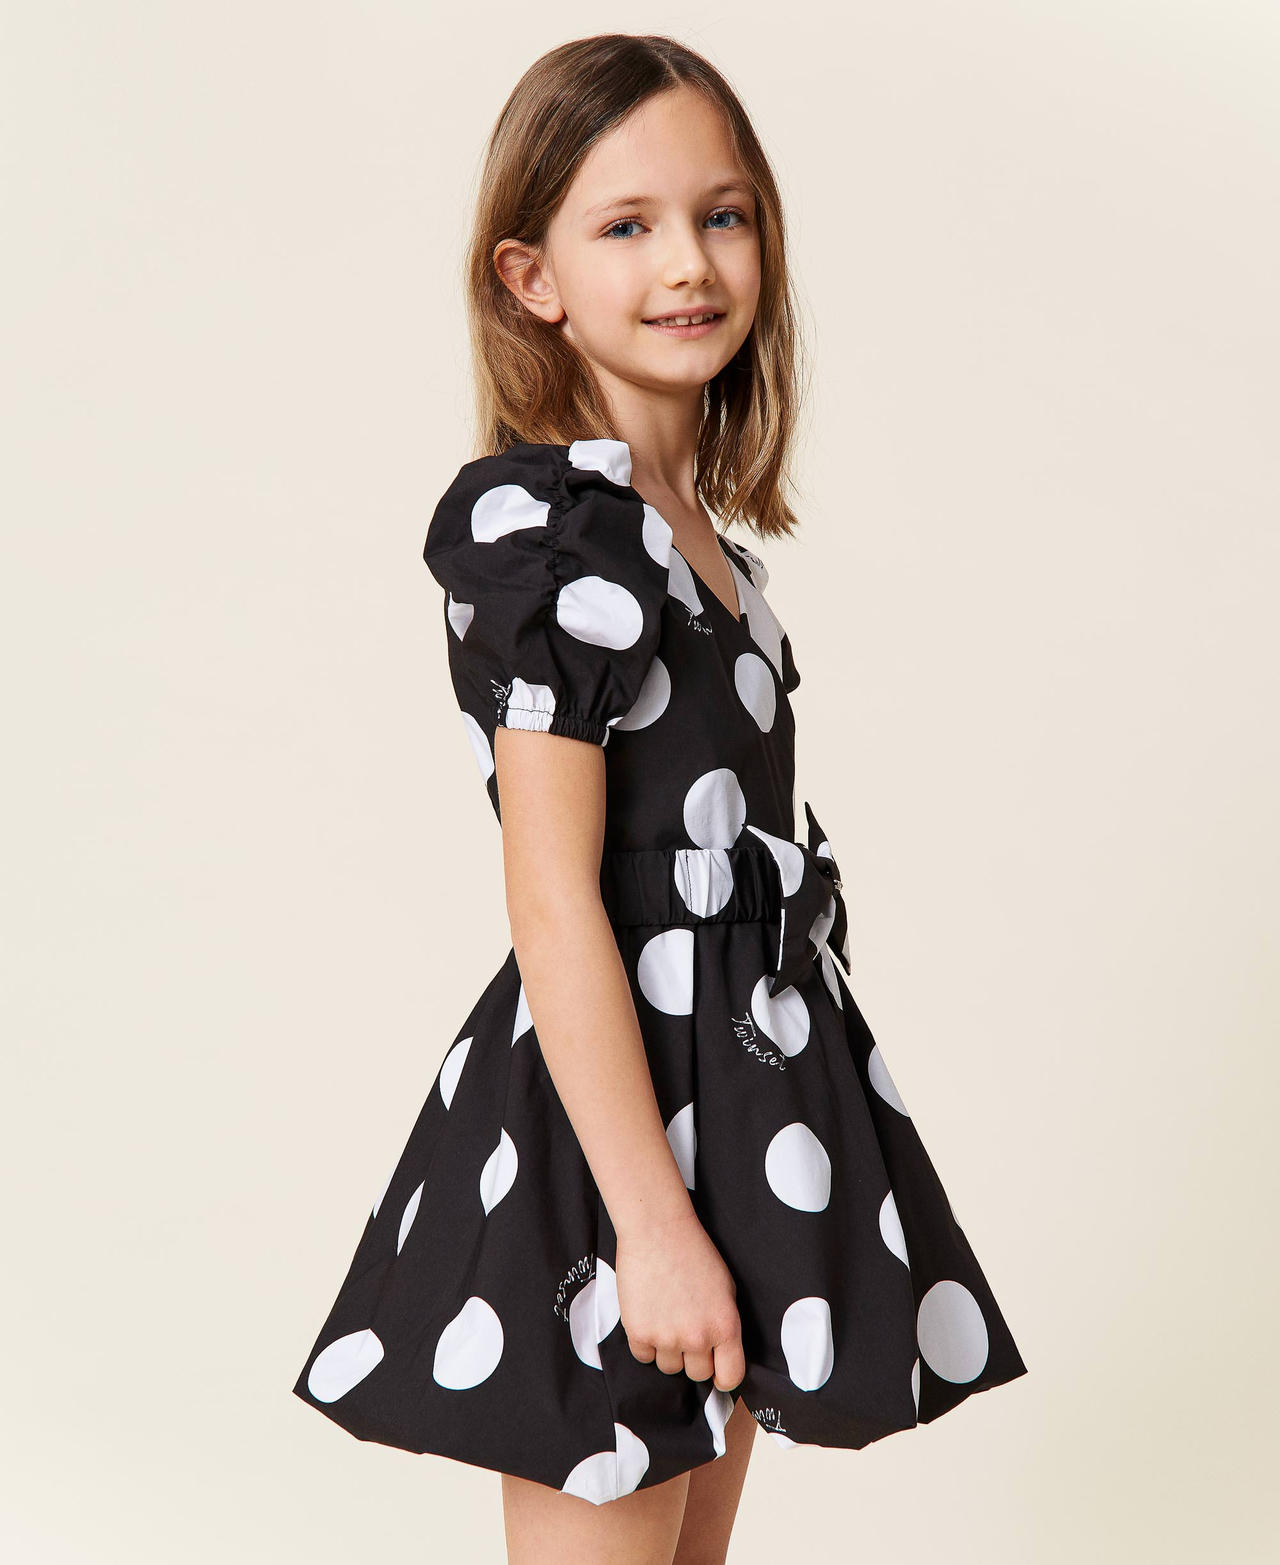 Poplin dress with double polka dot print Mixed Polka Dot Print Girl 221GJ2091-02